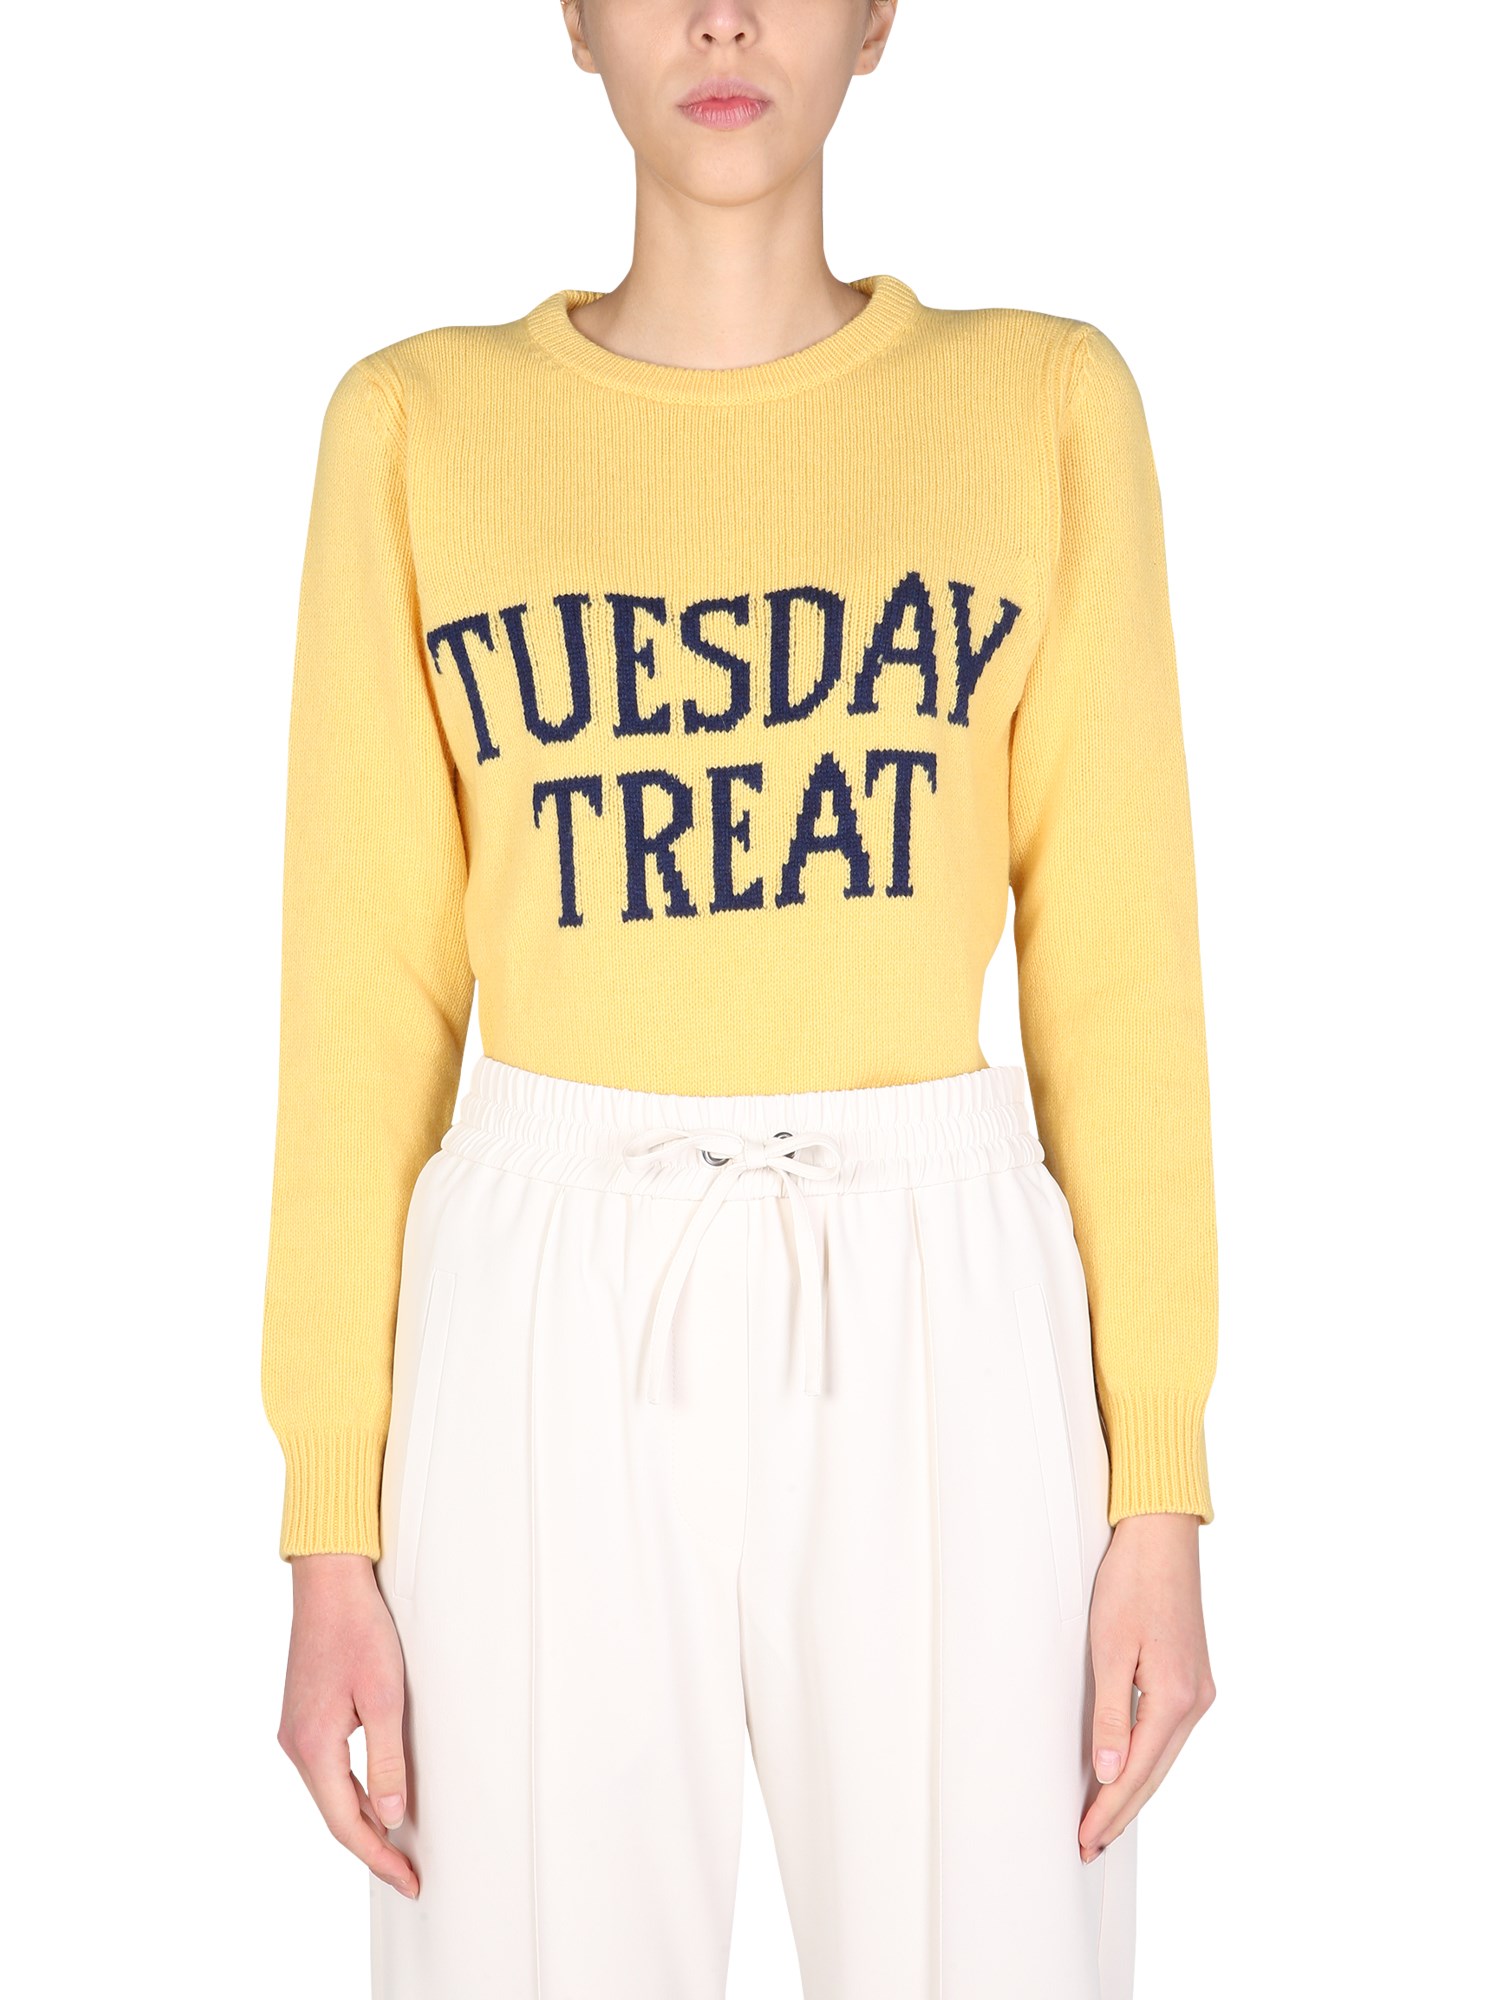 alberta ferretti "tuesday treat" sweater